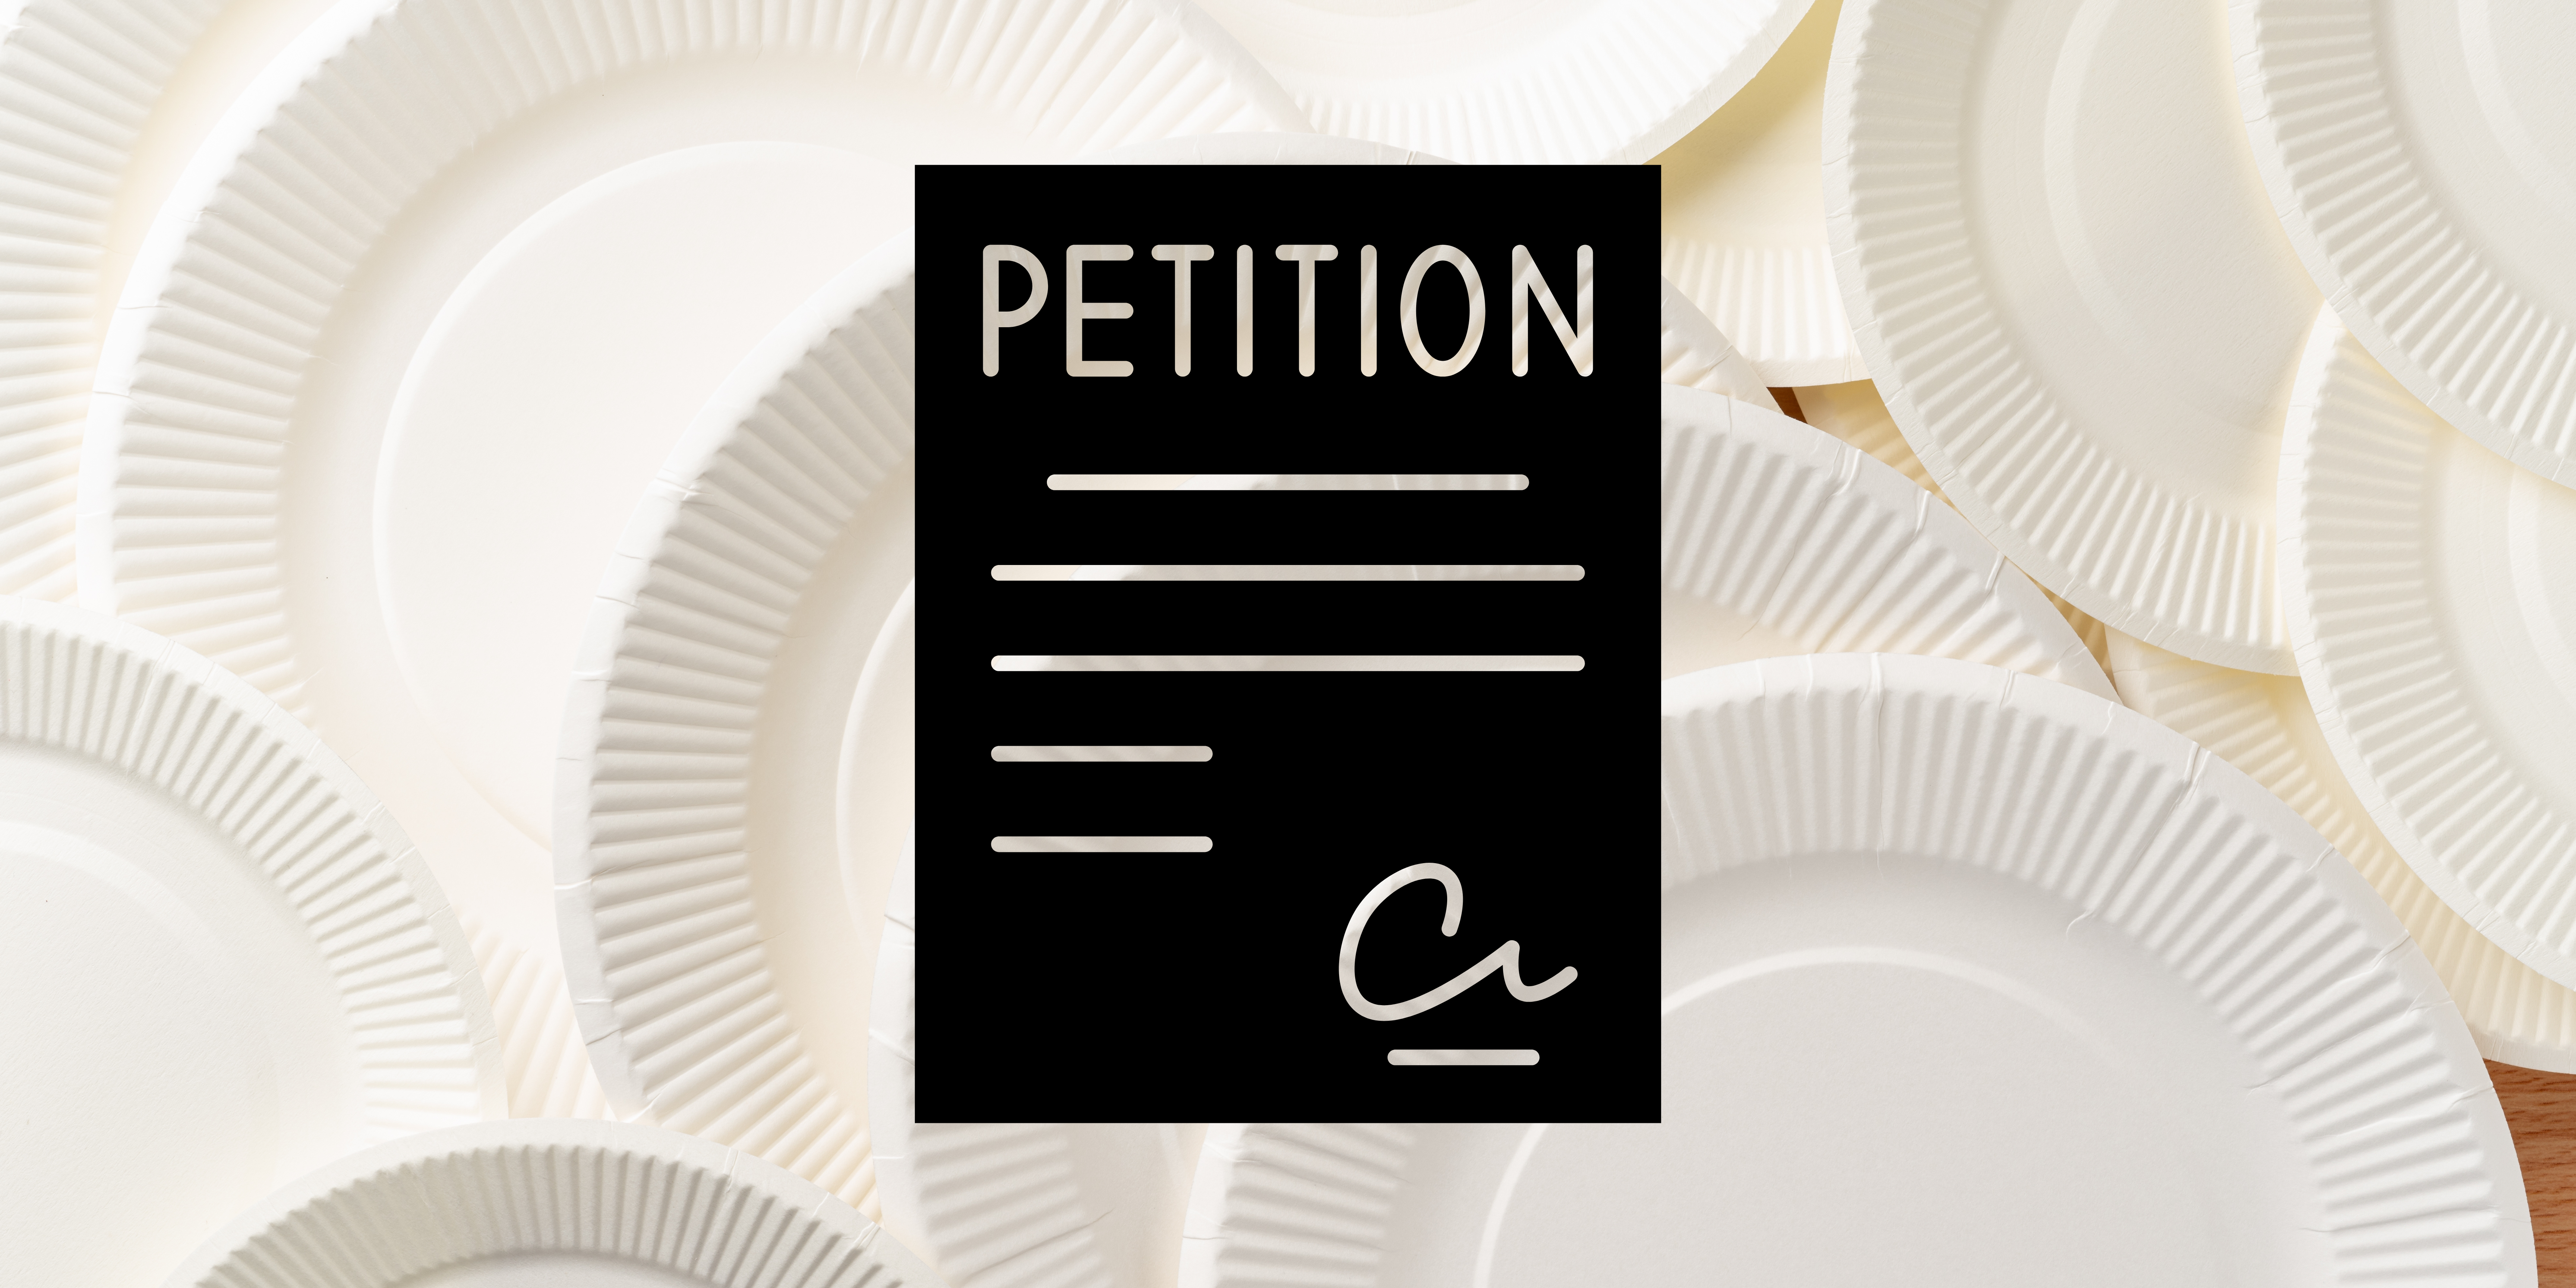 Paper Plates Petition